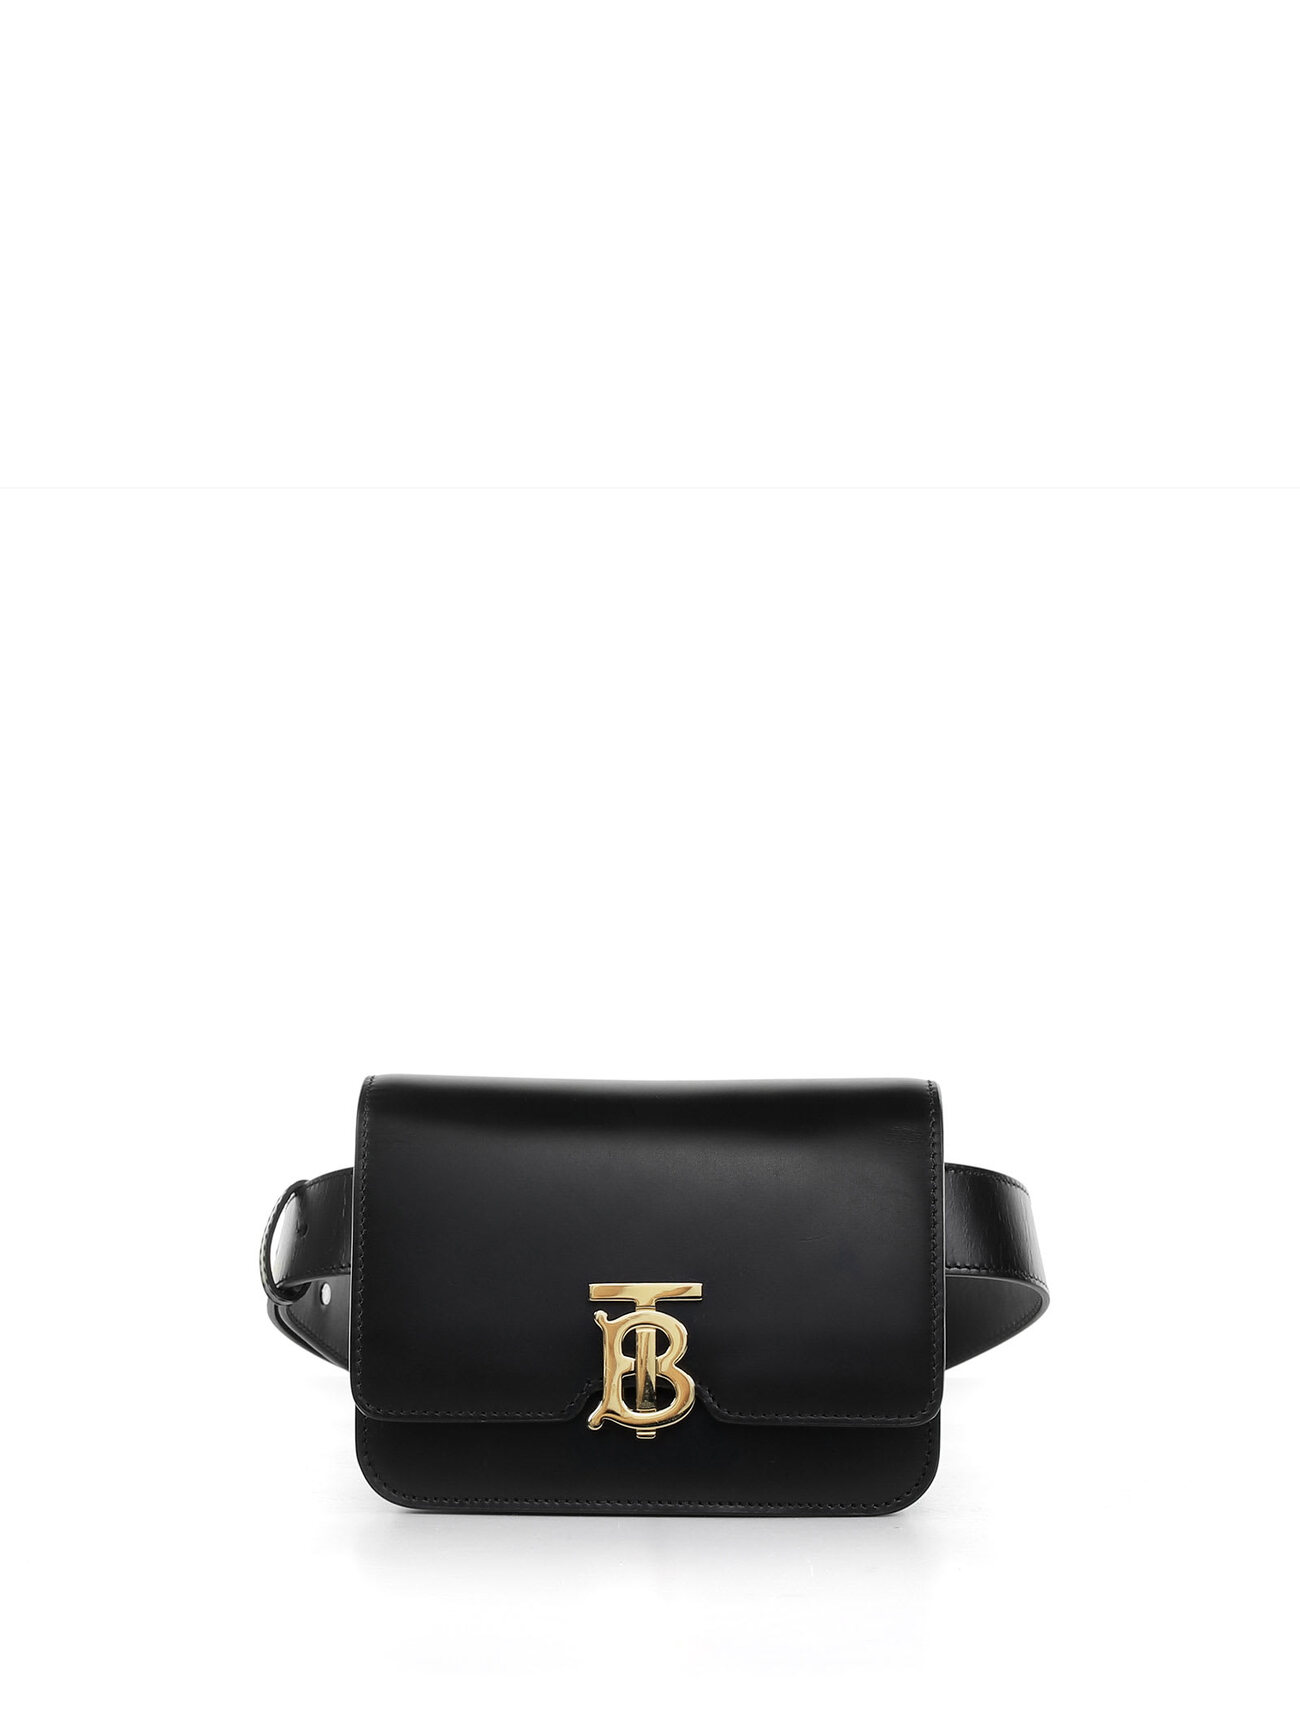 Black Leather Tb Burberry Bag